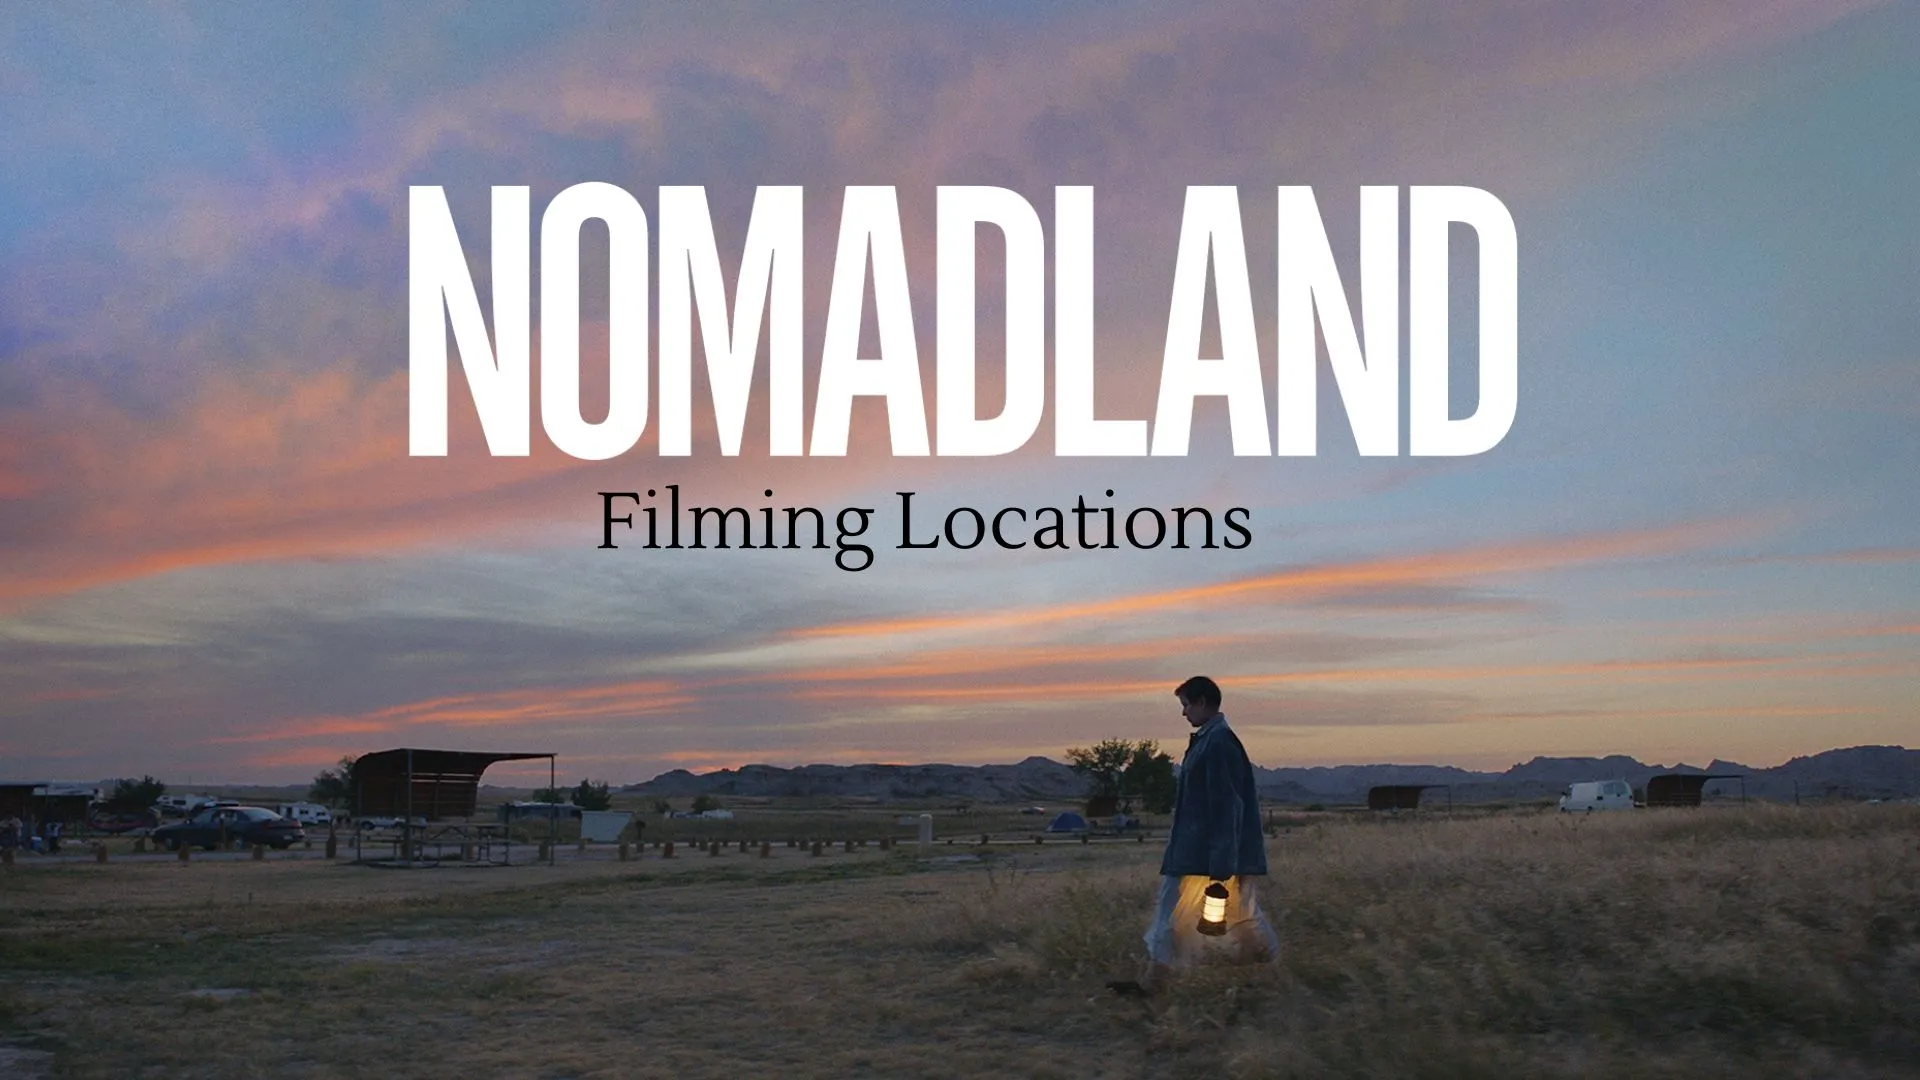 Nomadland Filming Locations